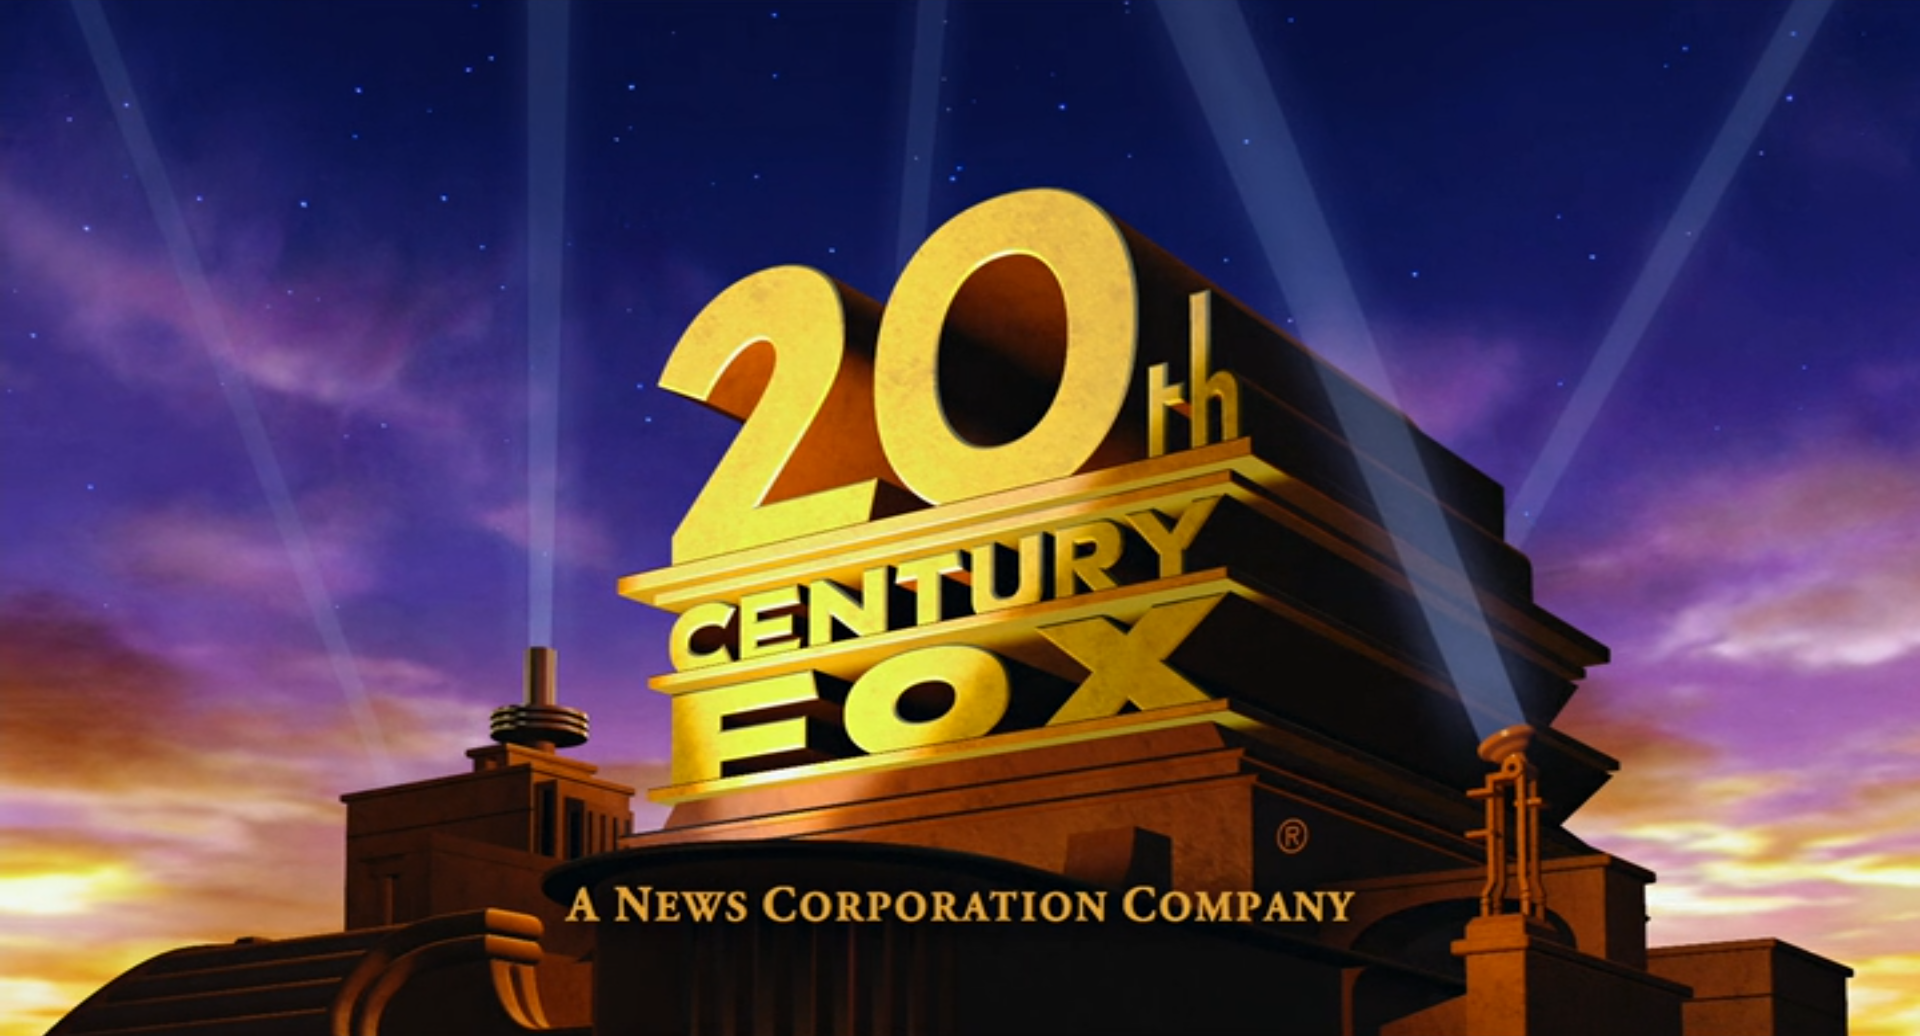 20th Century Fox logotyp